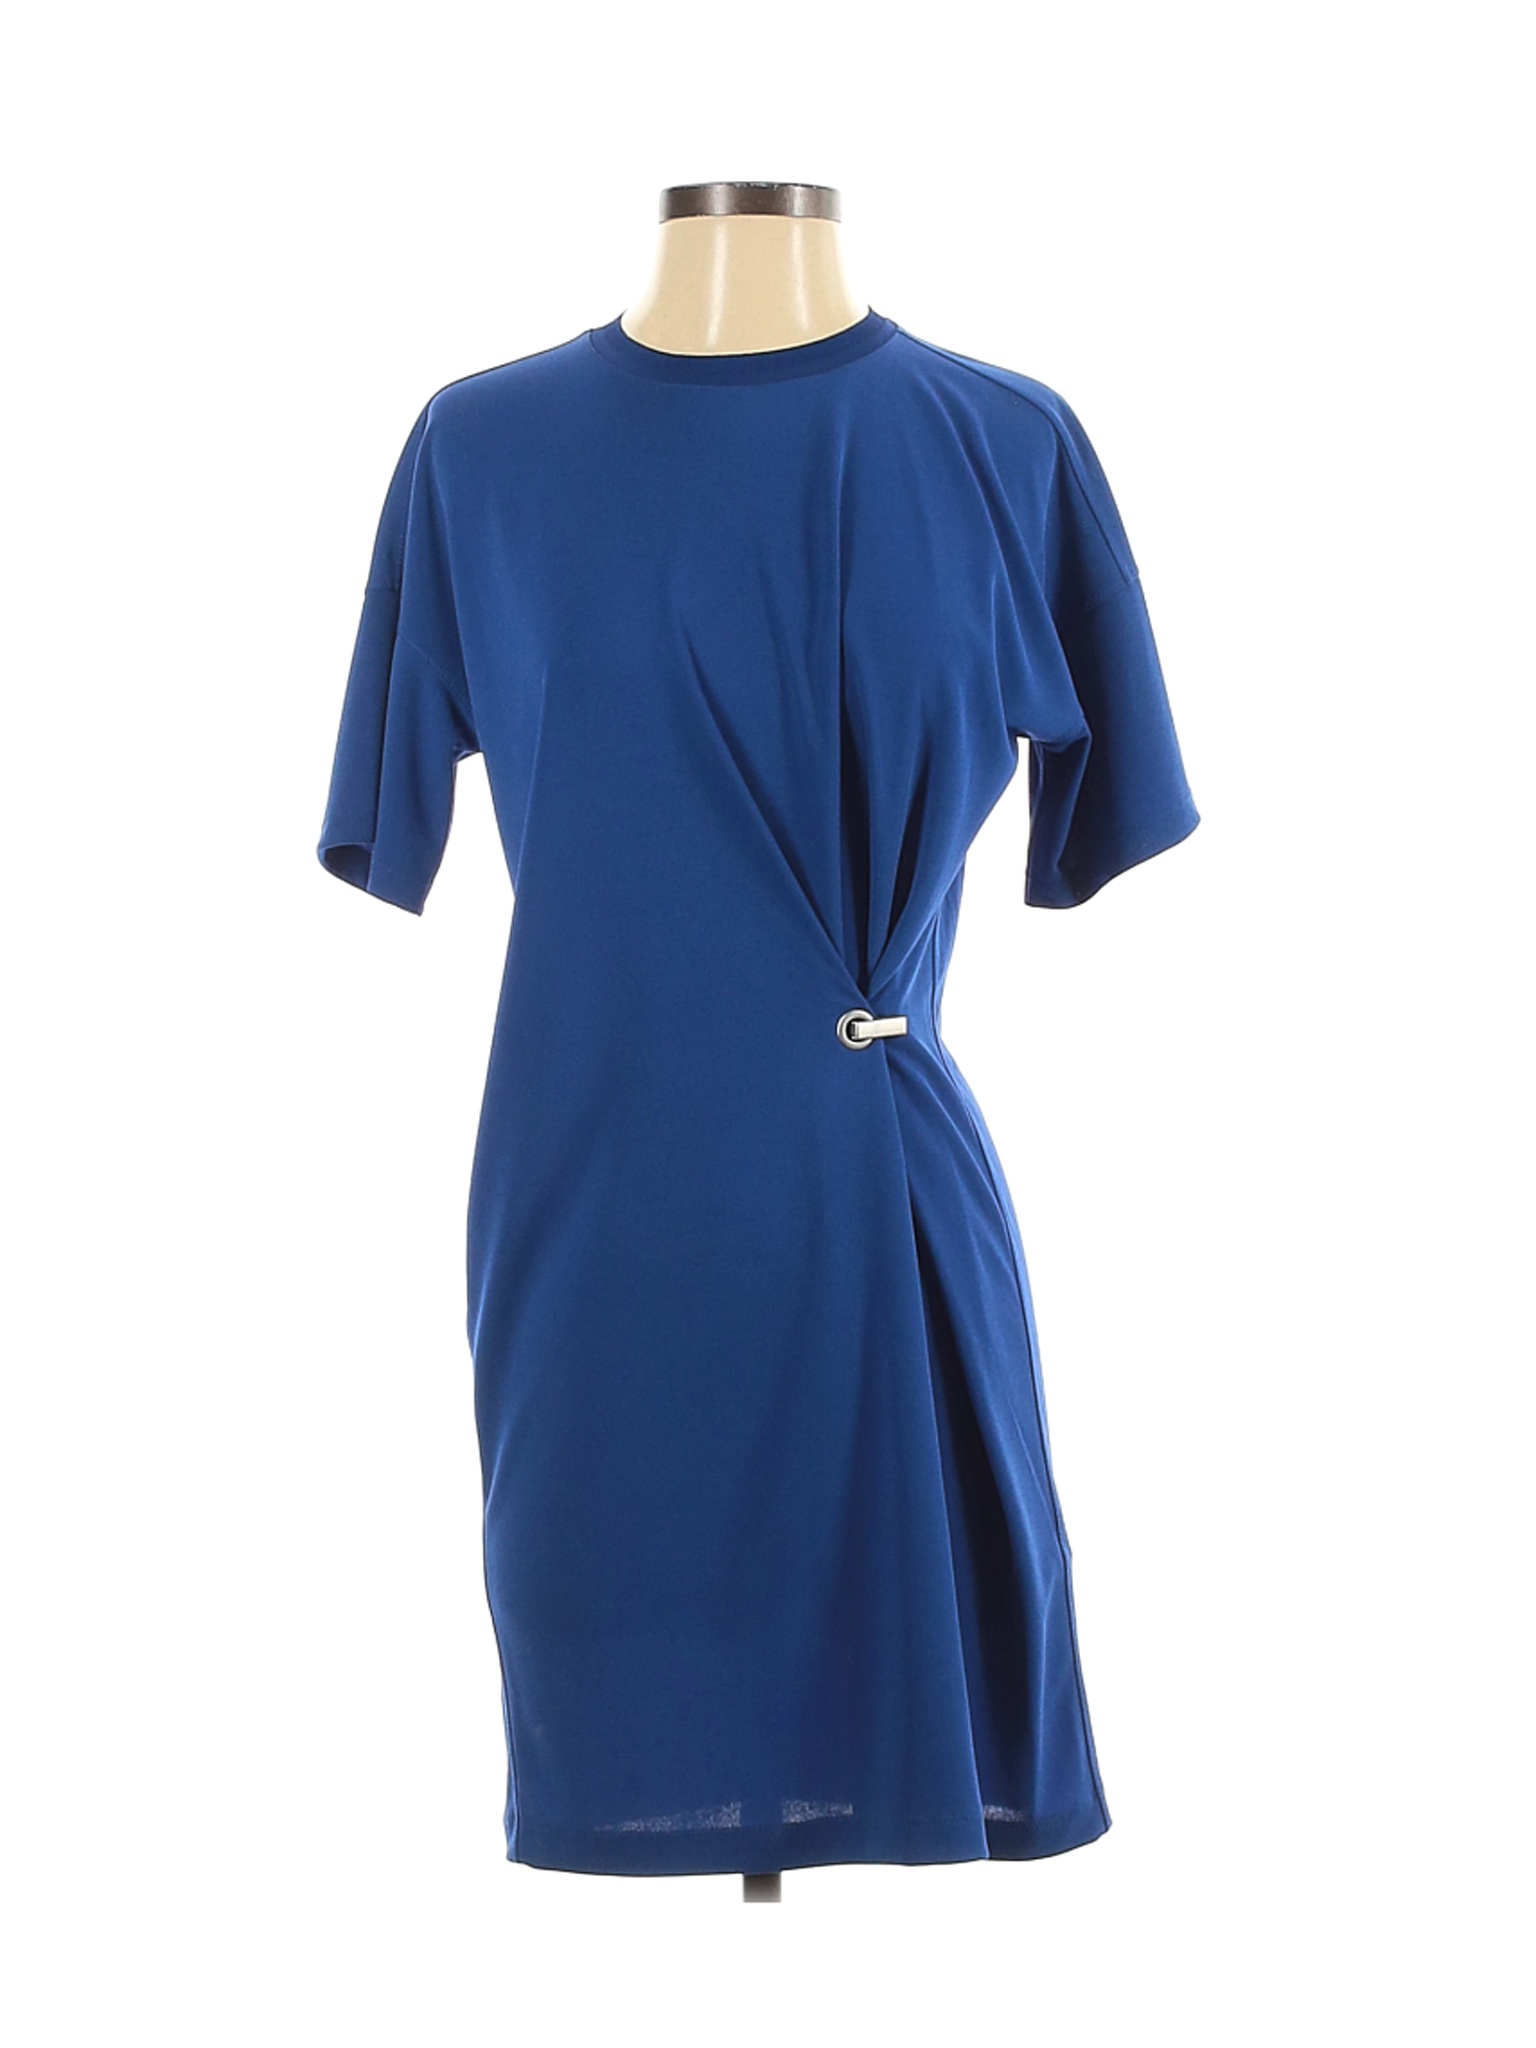 NWT Rag & Bone Women Blue Casual Dress XS | eBay